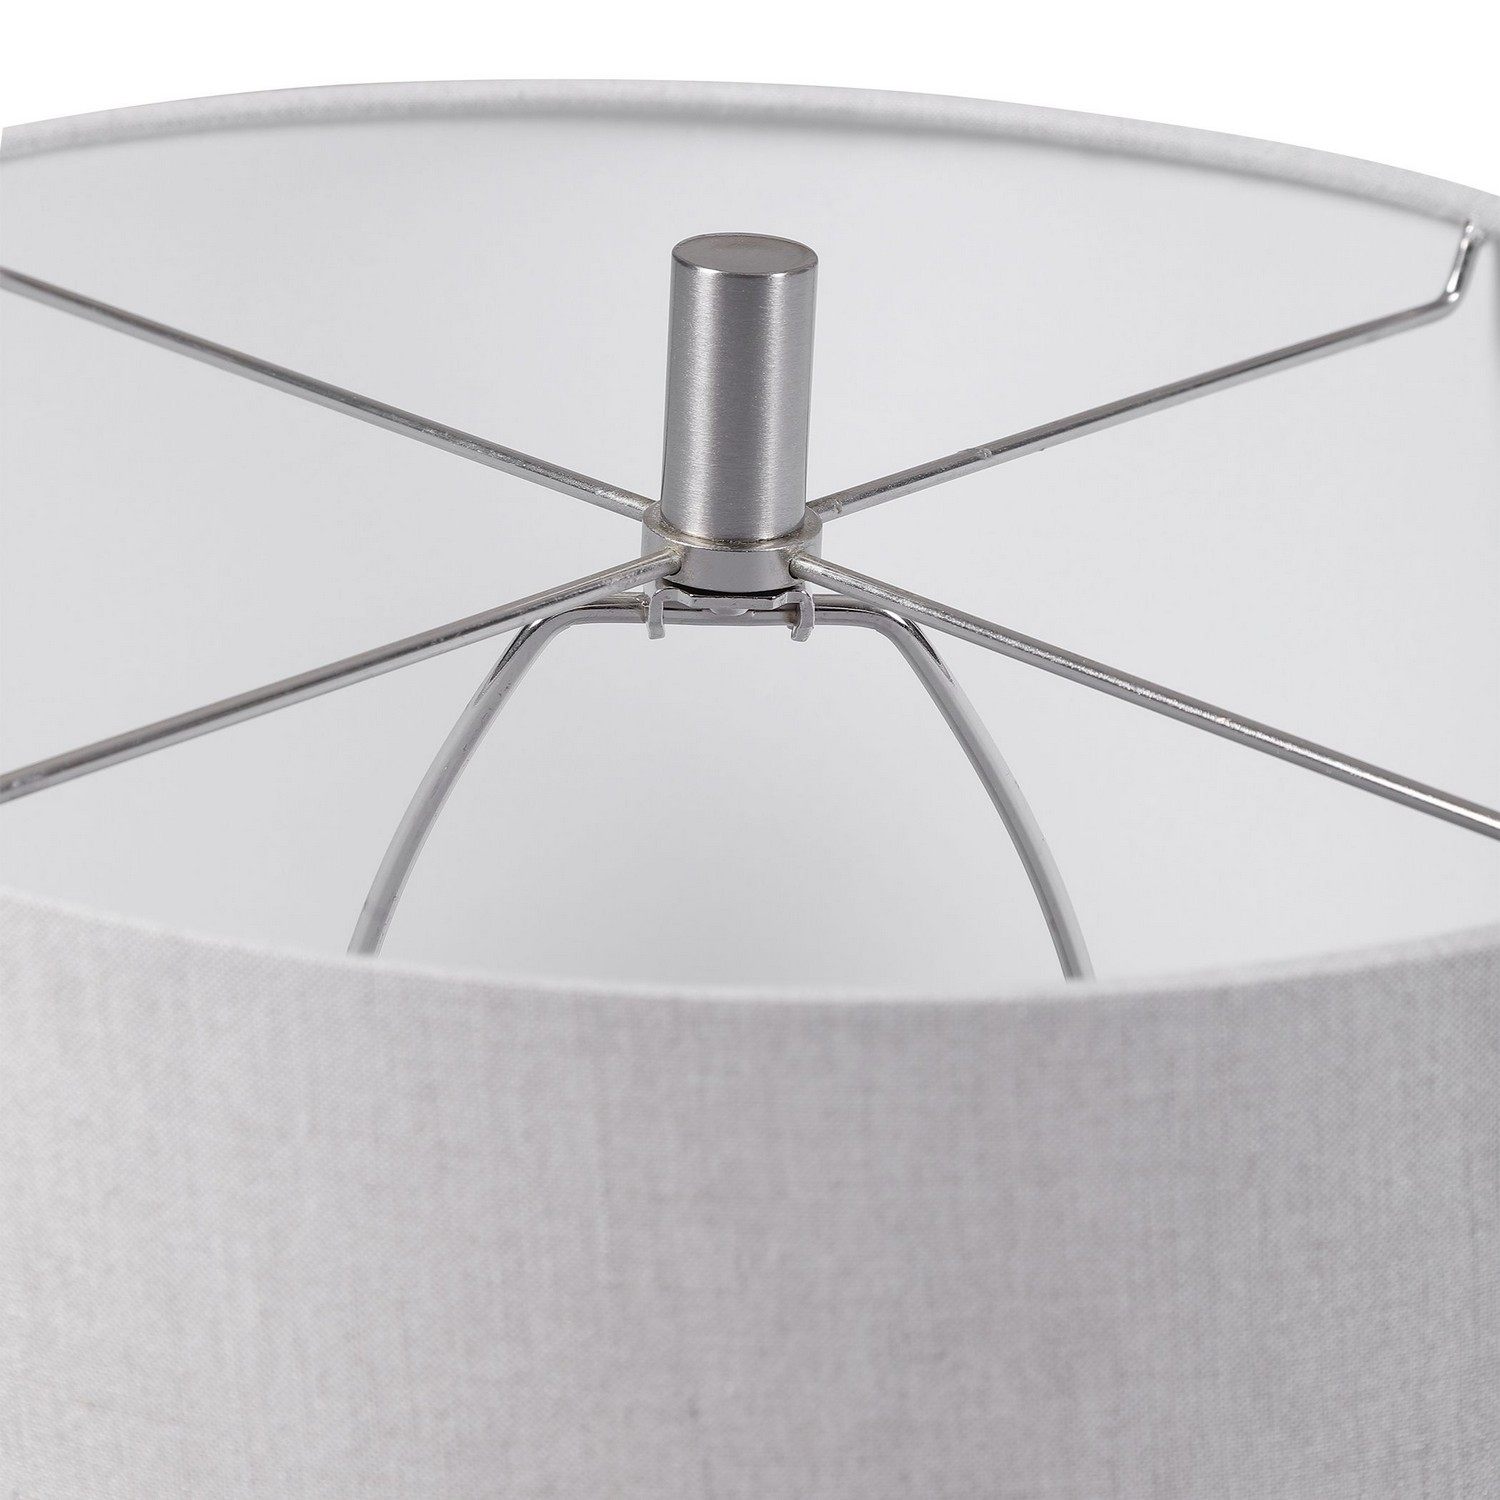 Uttermost Delgado Table Lamp - Light Gray